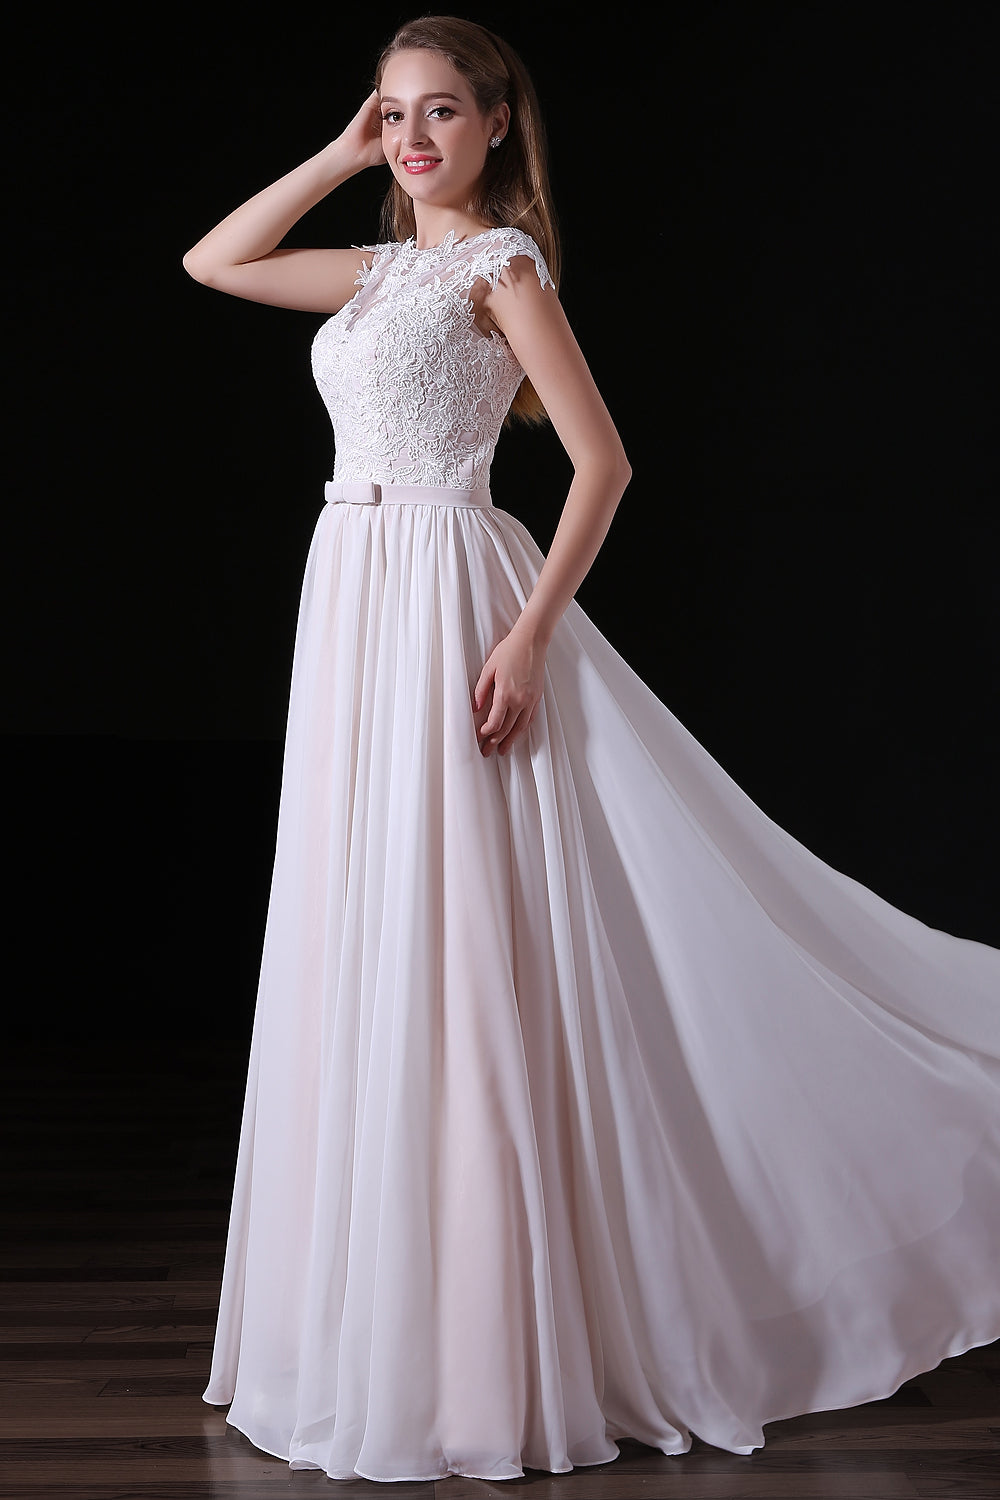 Wedsing Dresses Boho, Light Pink Chiffon Wedding Dresses with veil Lace Appliques Top Short Sleeve